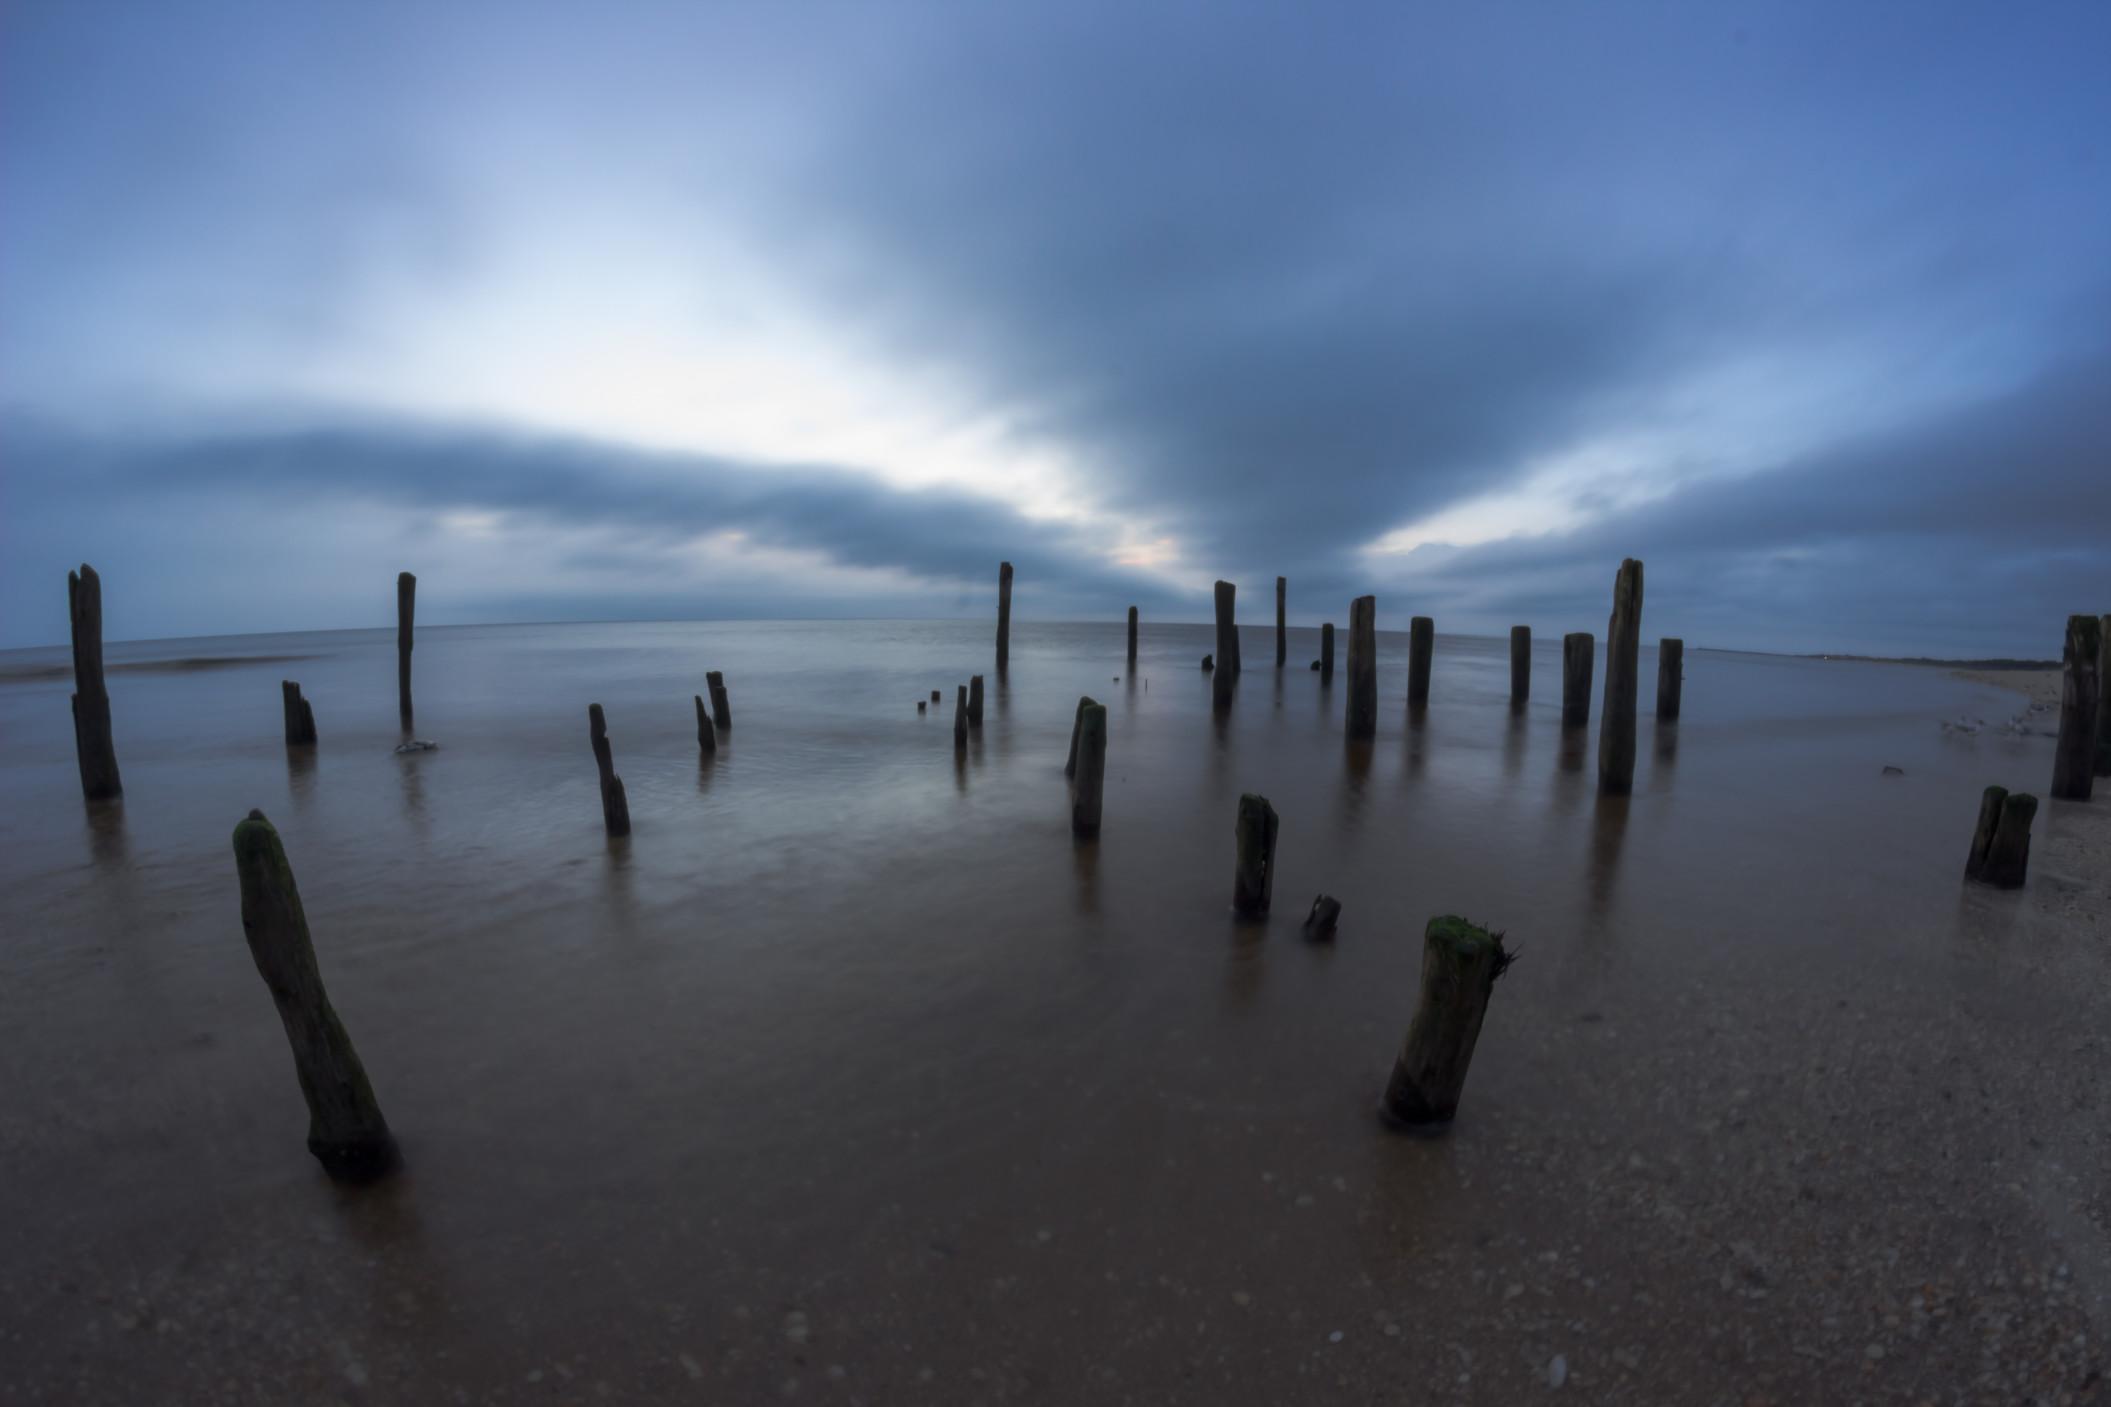 Eerie wooden posts emerging from the murky ocean. 